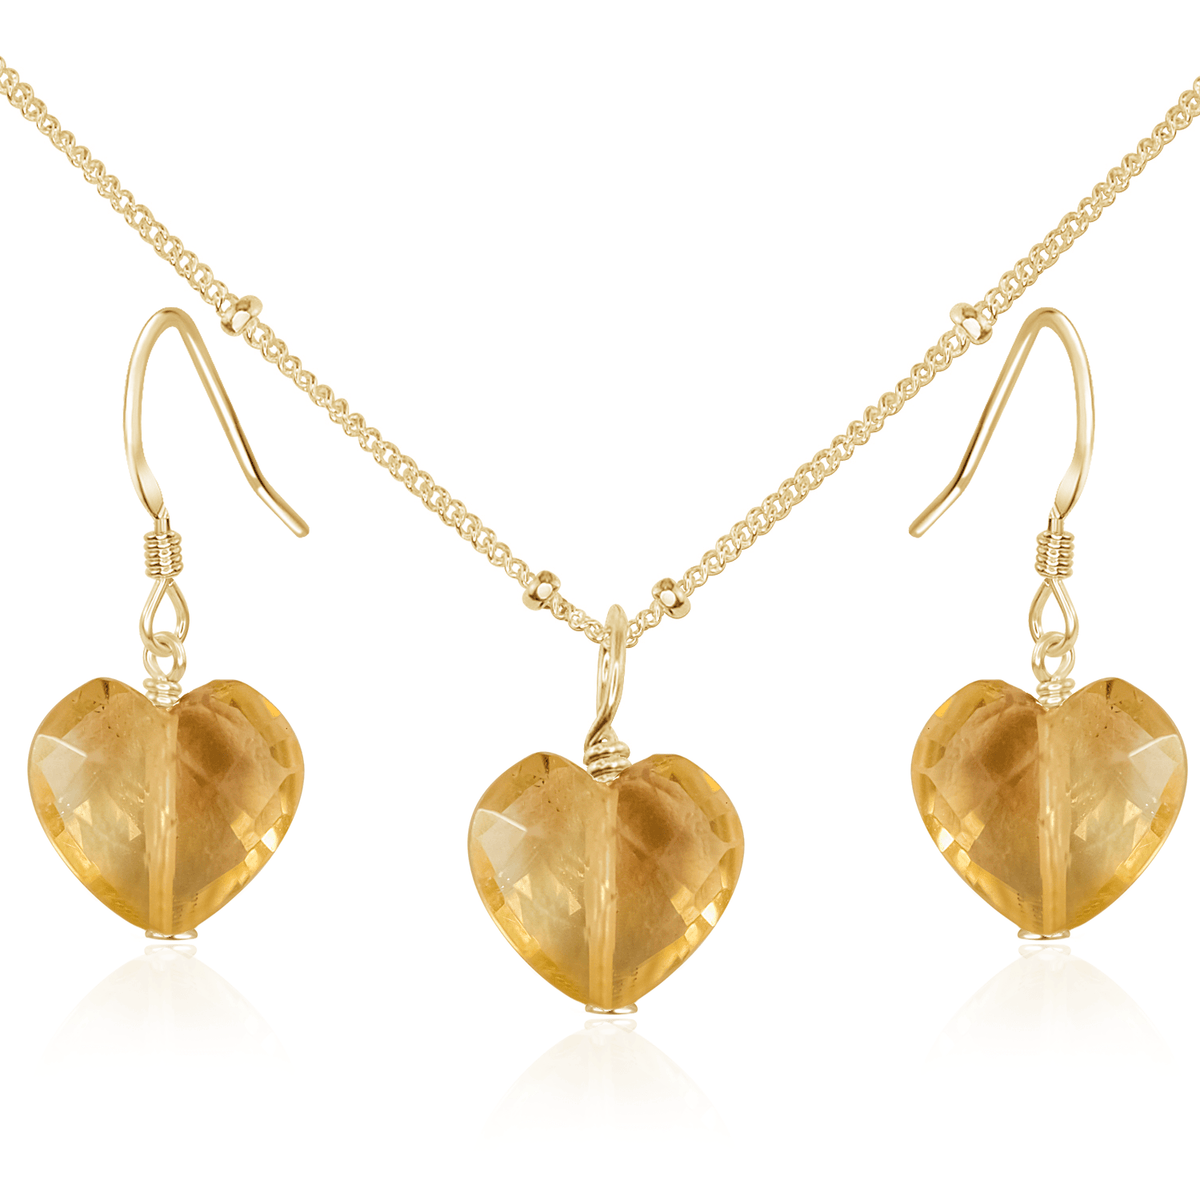 Citrine Crystal Heart Jewellery Set - Citrine Crystal Heart Jewellery Set - 14k Gold Fill / Satellite / Necklace & Earrings - Luna Tide Handmade Crystal Jewellery